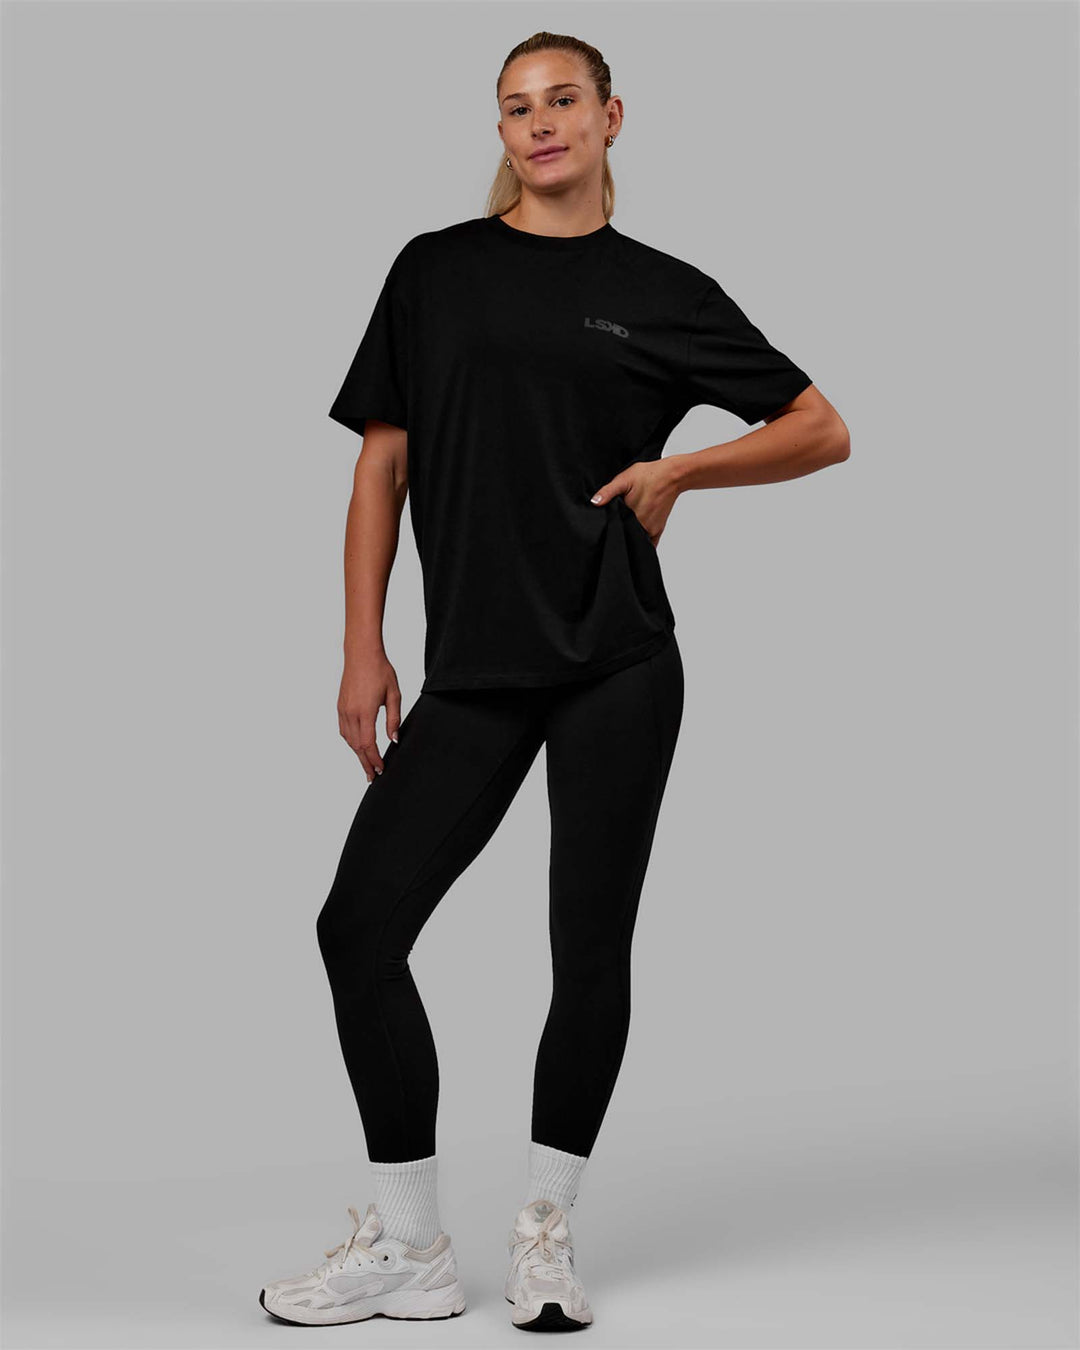 Woman wearing Unisex E.T.J FLXCotton Tee Oversize - Black-Black